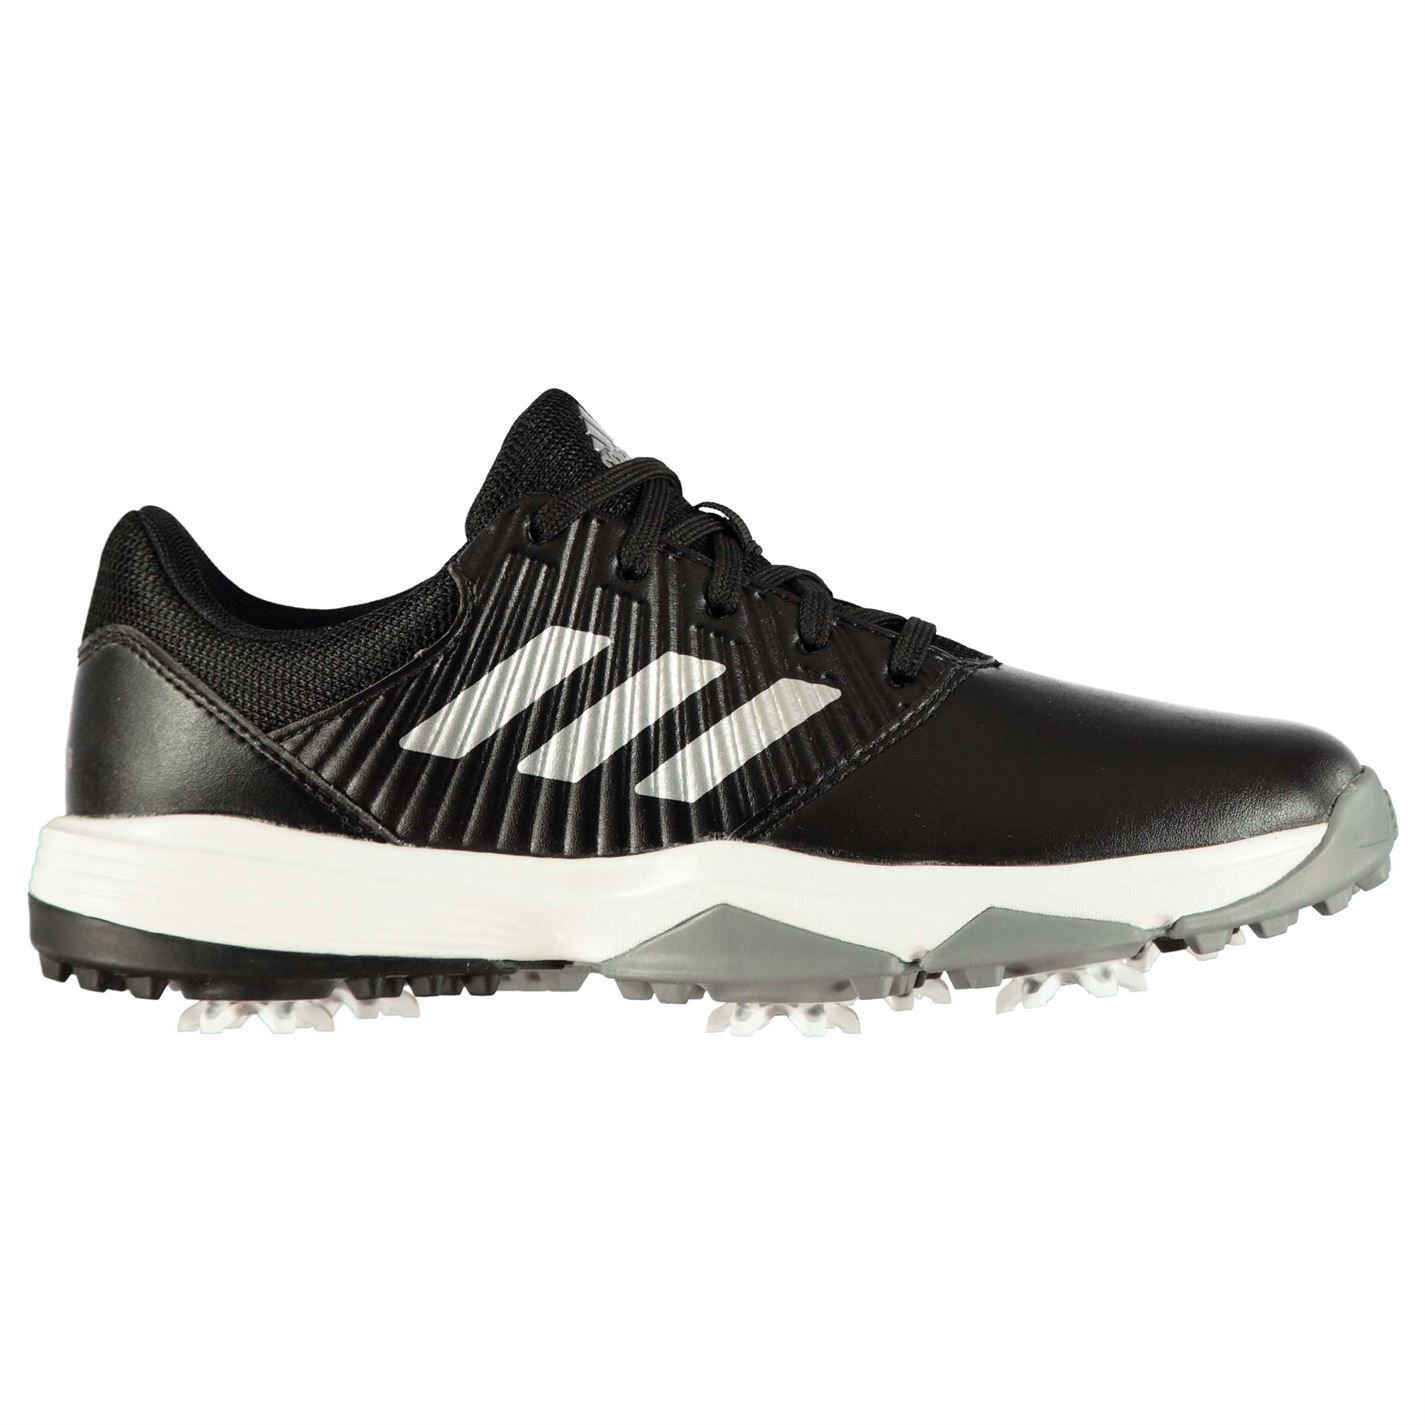 Junior buty golfowe Adidas CP Traxion Junior Buty Do Golfa Core Black/Silver Metal/White UK 3